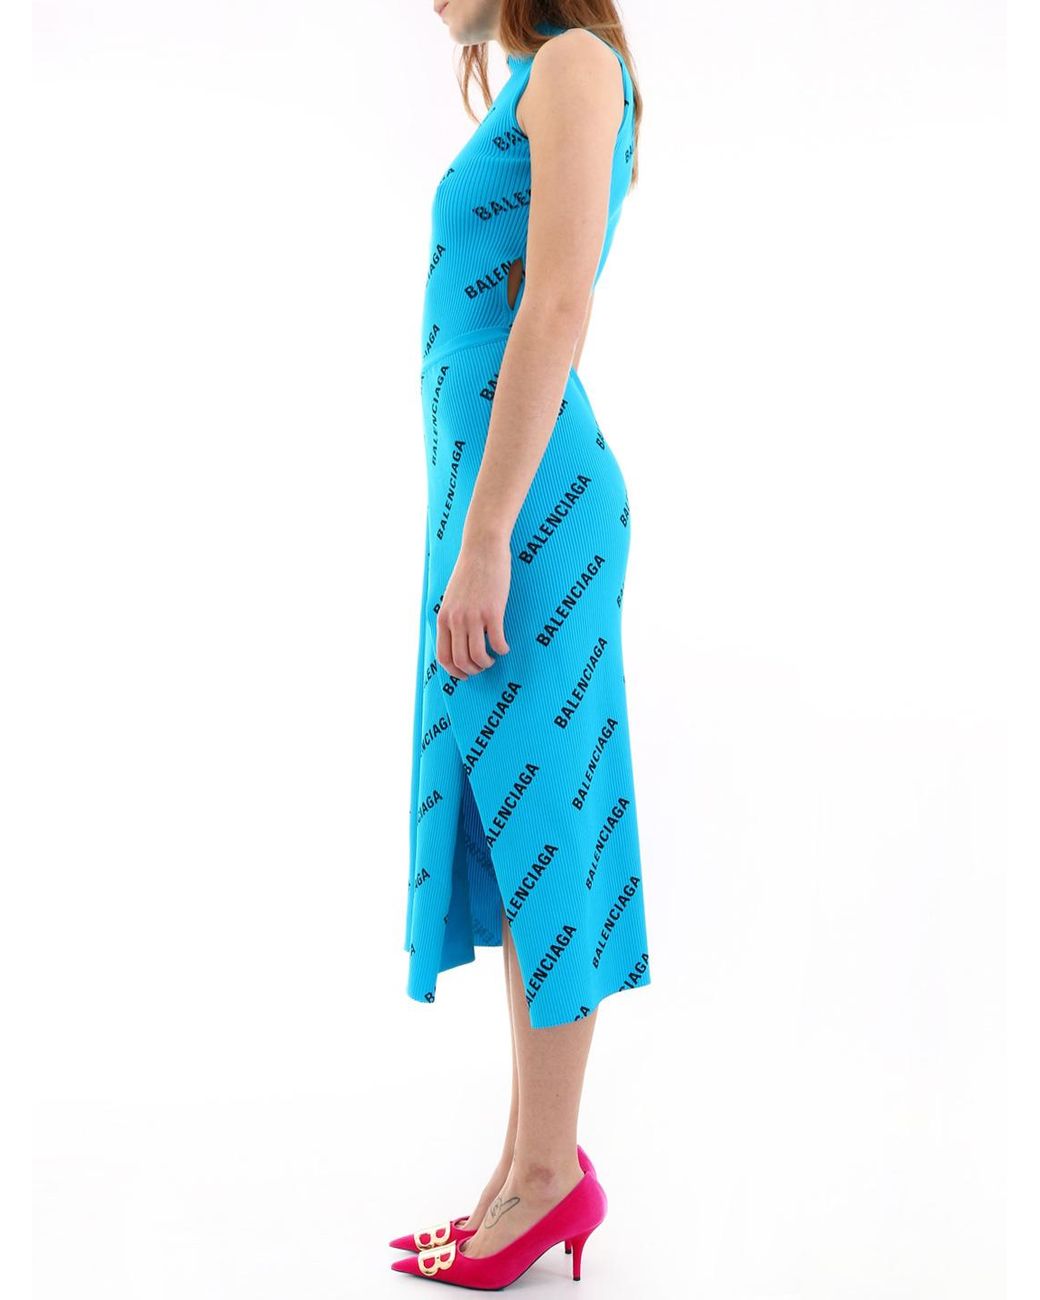 Balenciaga All-over Logo Wrap Dress in Light Blue (Blue) | Lyst